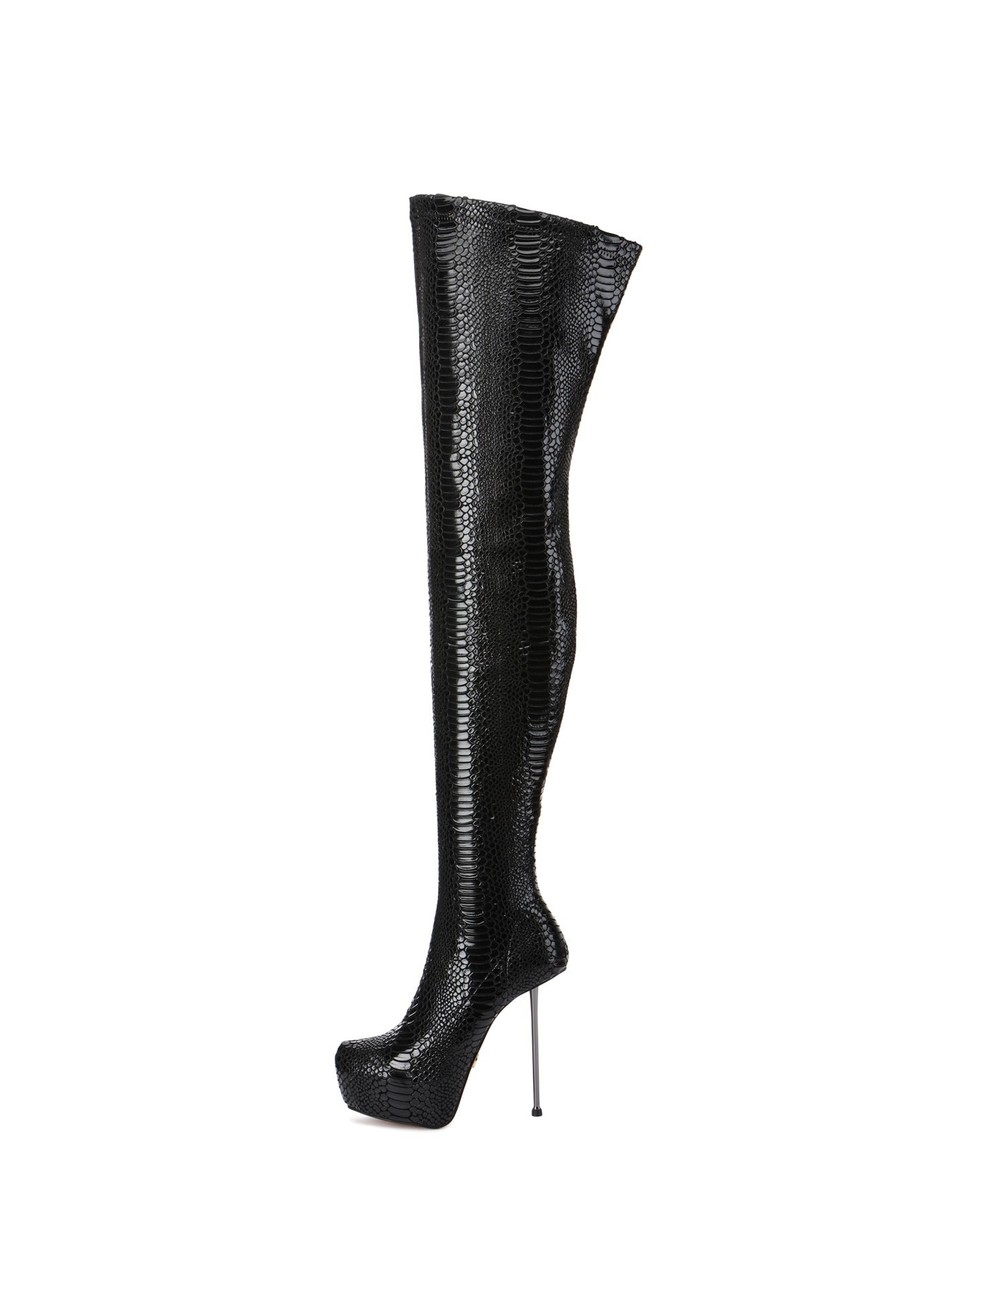 BRISA BLACK SHINY - Giaro High Heels | Official store - All Vegan High ...